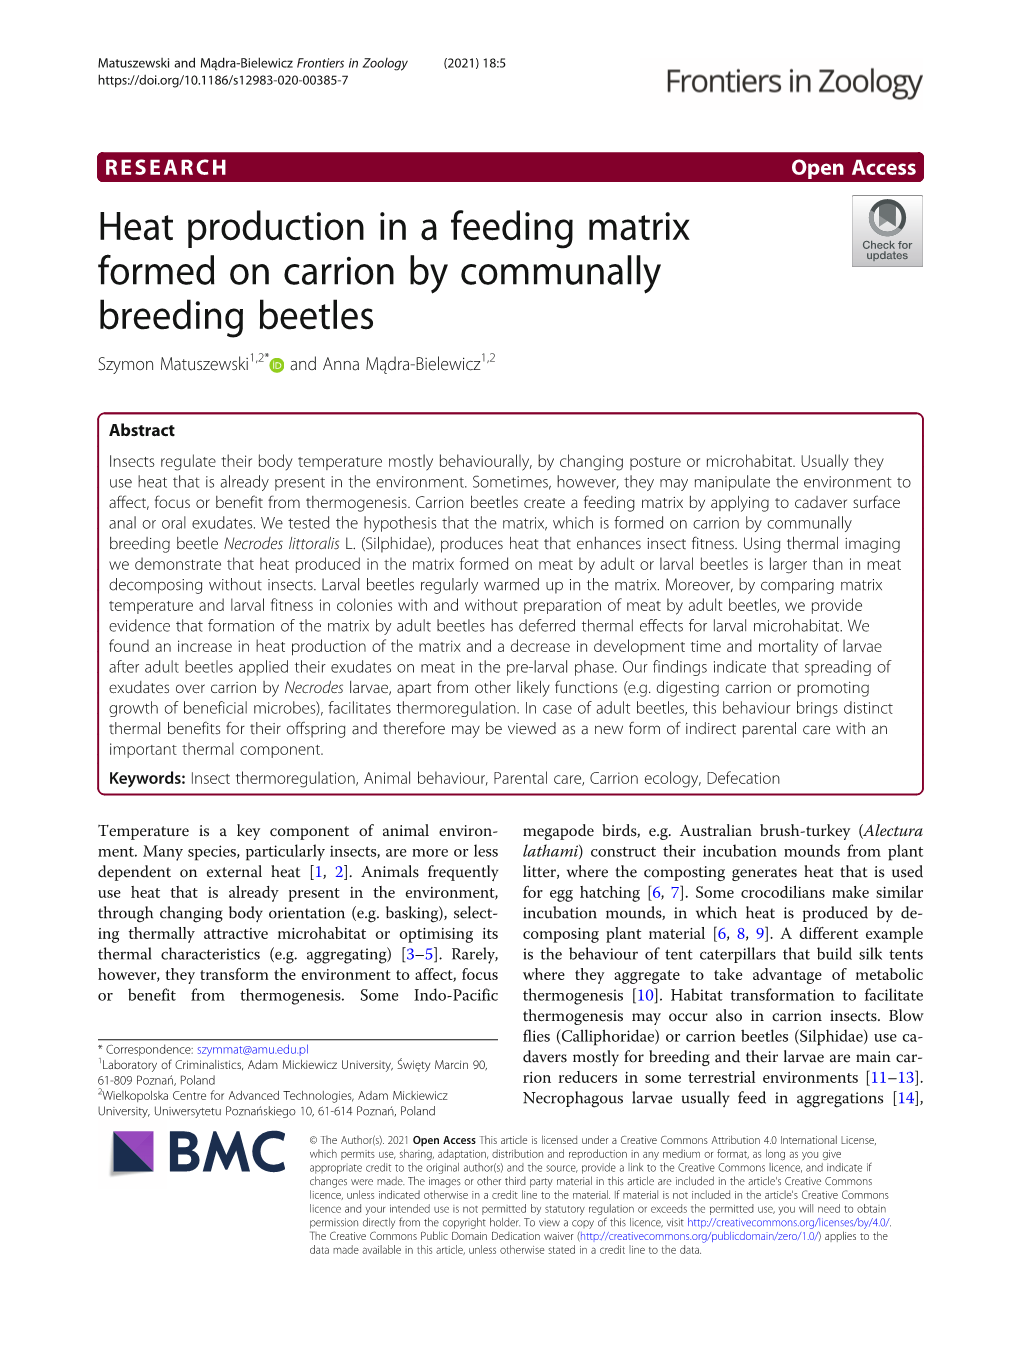 Heat Production in a Feeding Matrix Formed on Carrion by Communally Breeding Beetles Szymon Matuszewski1,2* and Anna Mądra-Bielewicz1,2